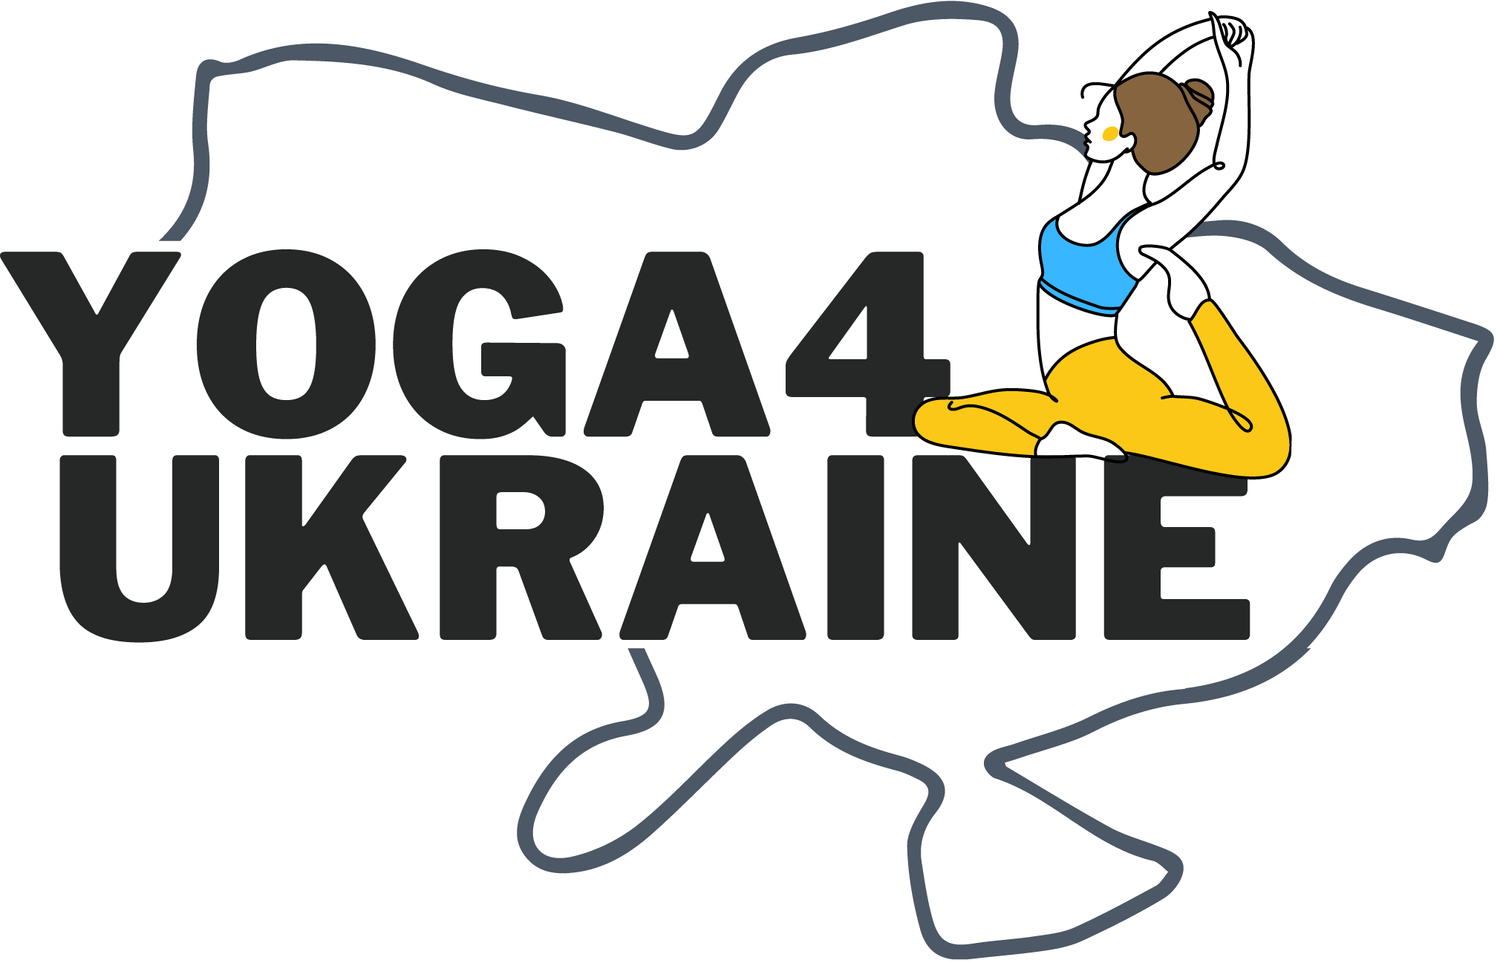 Online: Yoga4Ukraine